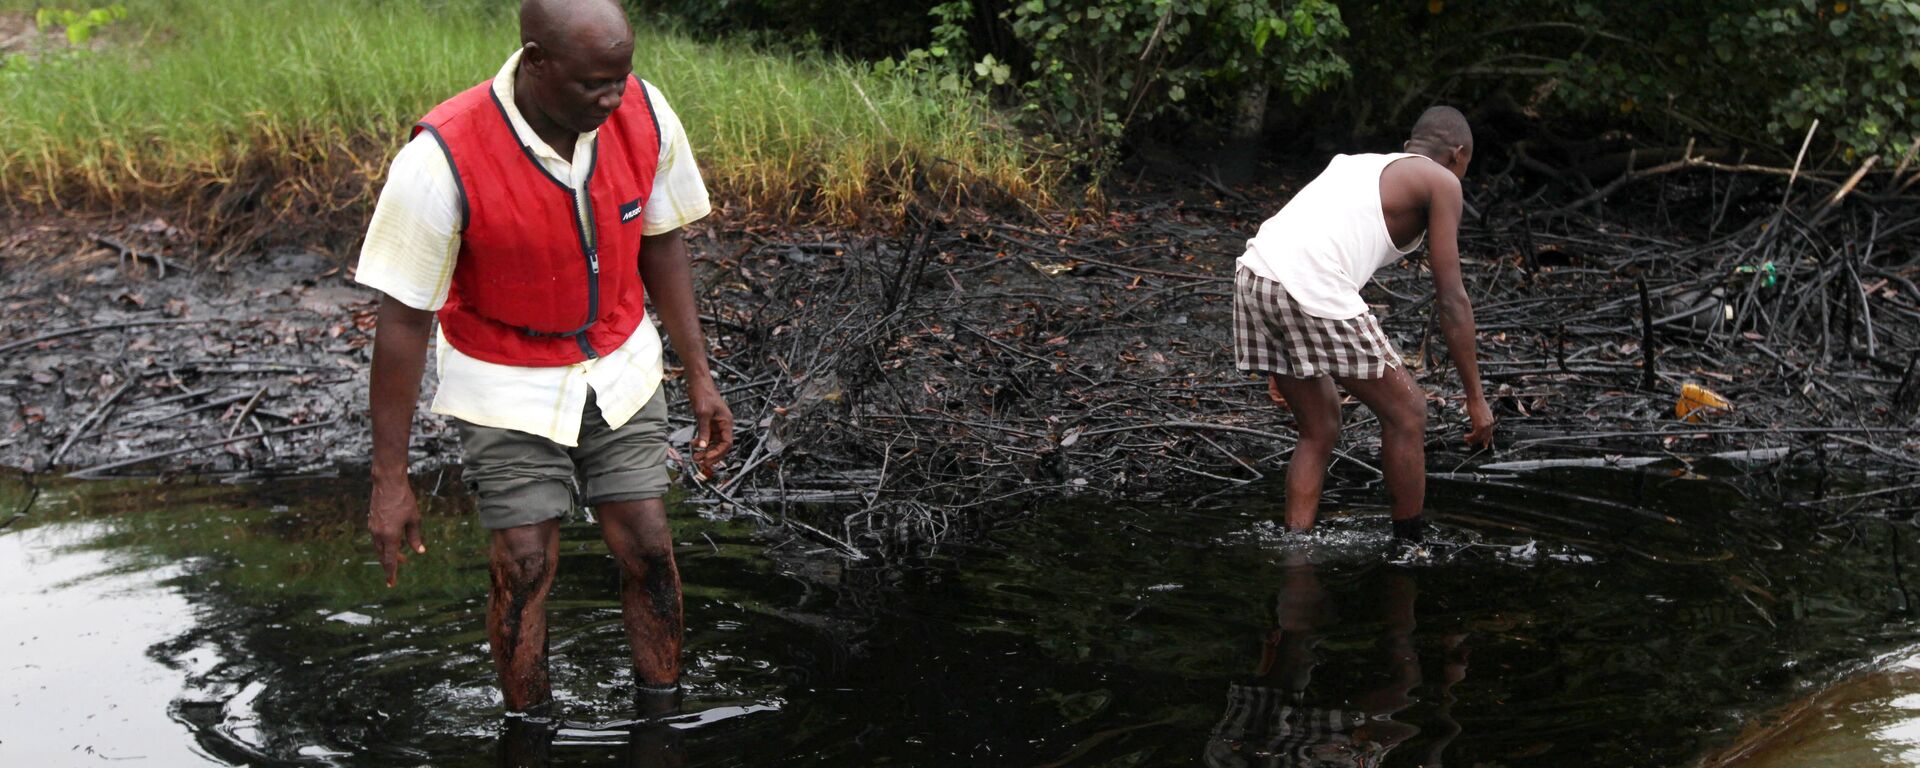 In this June 20, 2010 file photo, men walk in an oil slick covering a creek near Bodo City in the oil-rich Niger Delta region of Nigeria - Sputnik International, 1920, 14.02.2018